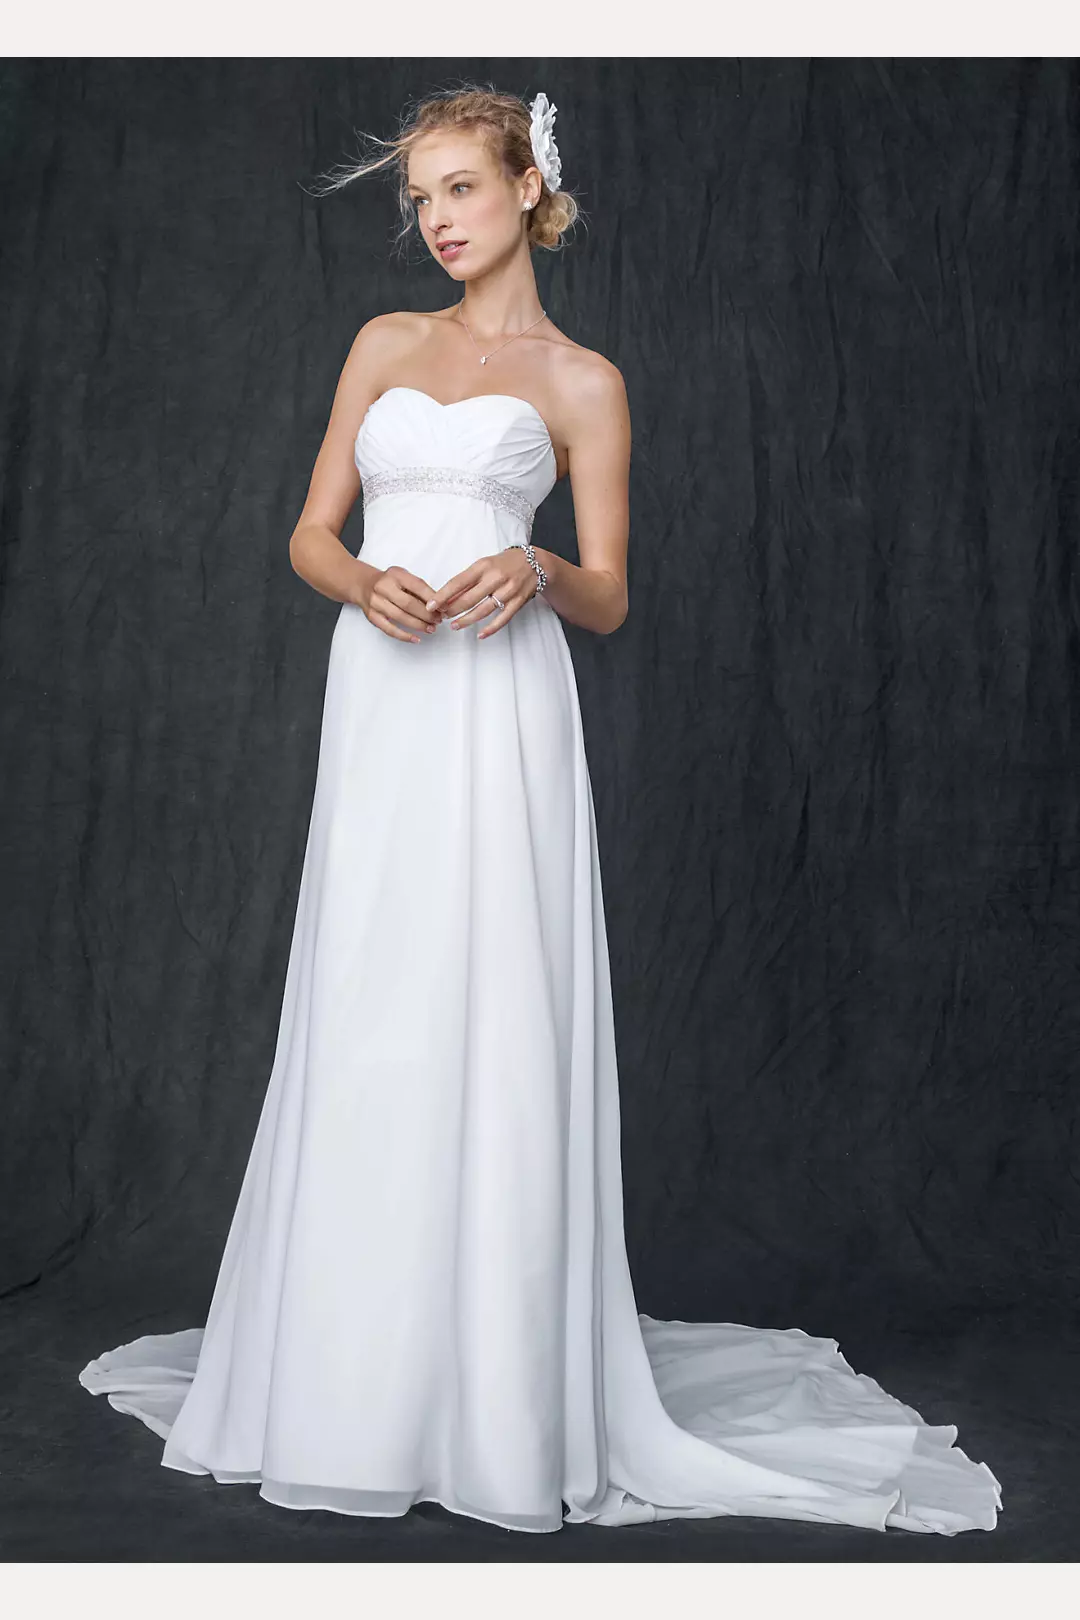 Sweetheart Chiffon Wedding Dress with Side Drape Image